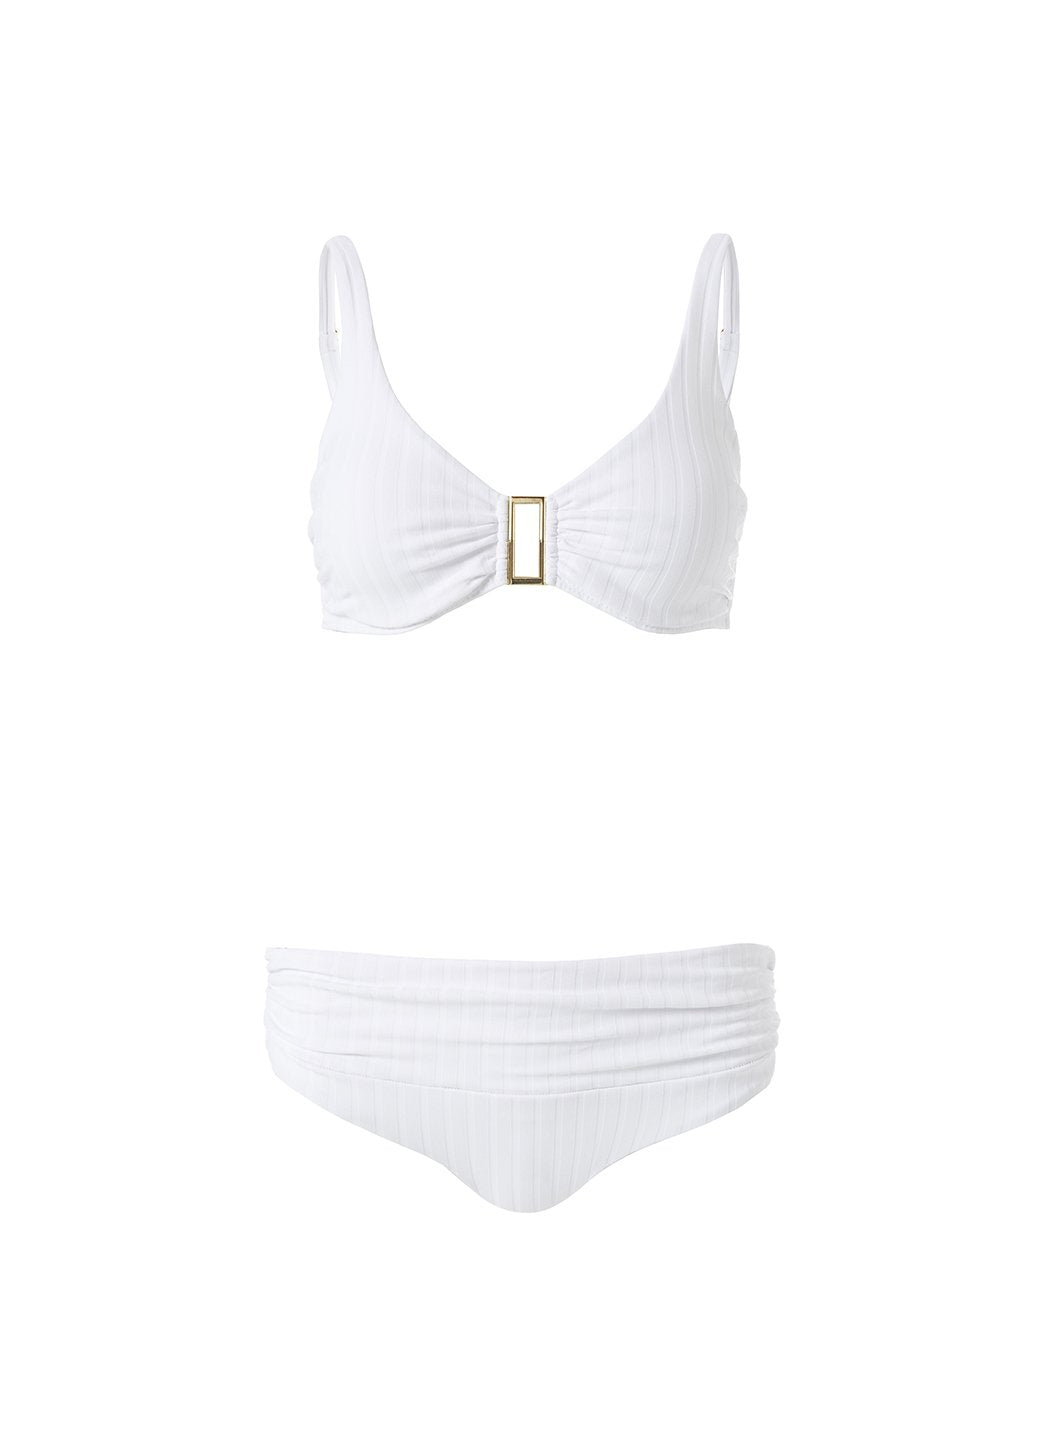 Bel Air Ribbed White Bikini Top